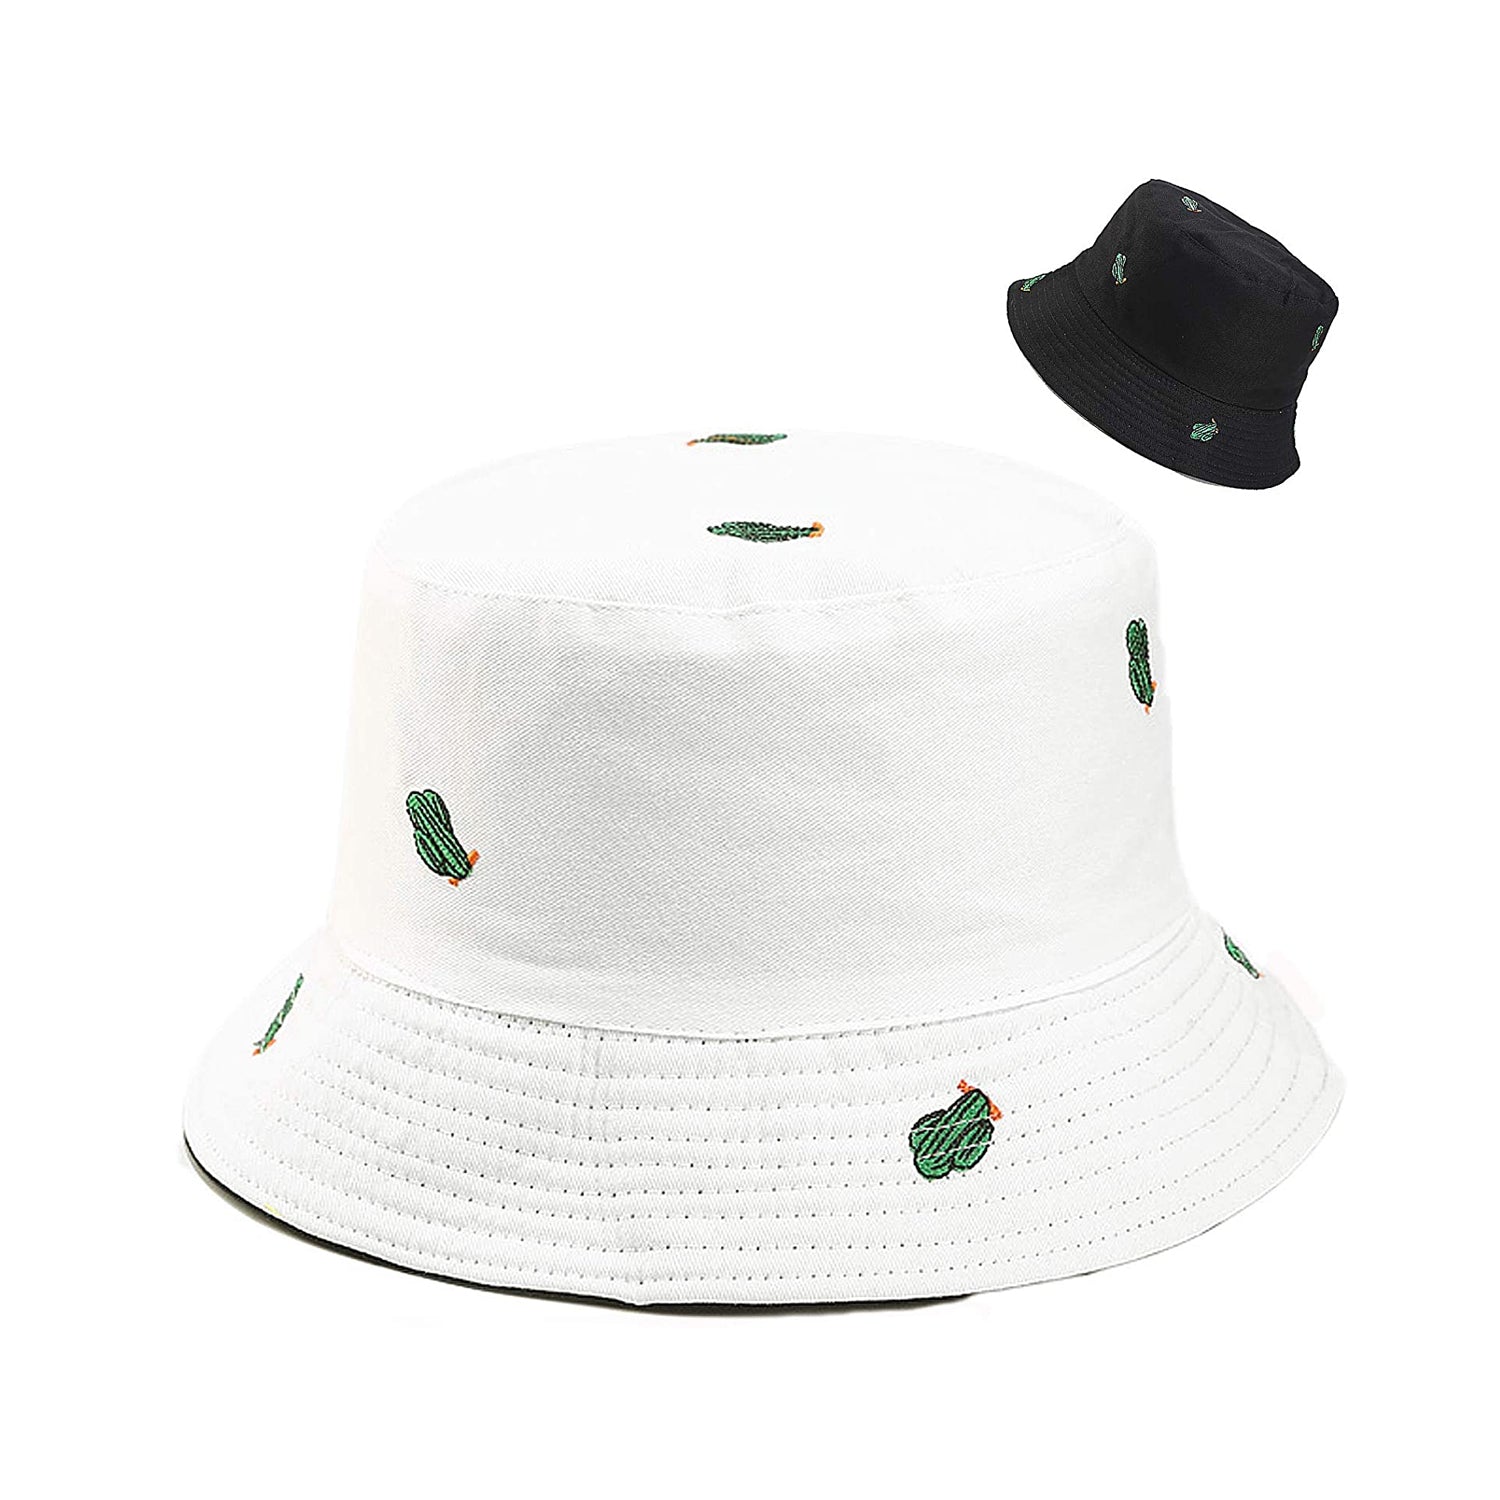 TOPONE ACCESSORIES LIMITED Custom Screen Printed Reversible Unisex Beach Travel Packable Bucket Hat Topone Accessories Ltd. 